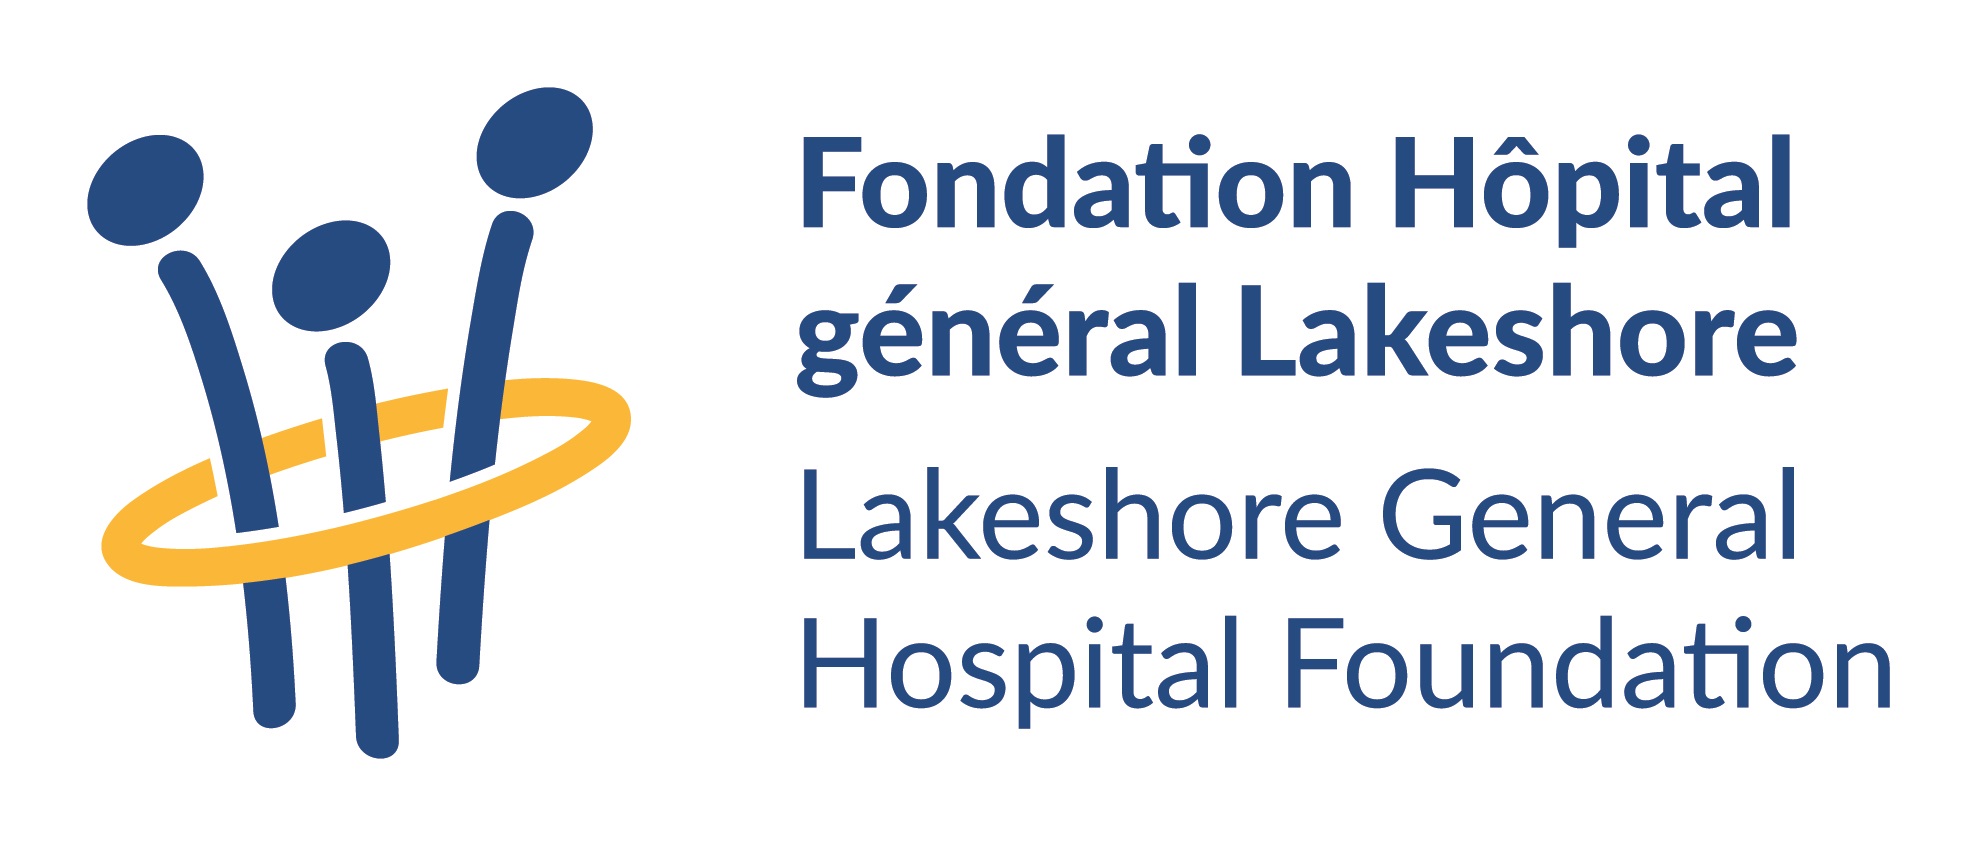 Fondation Hôpital général Lakeshore